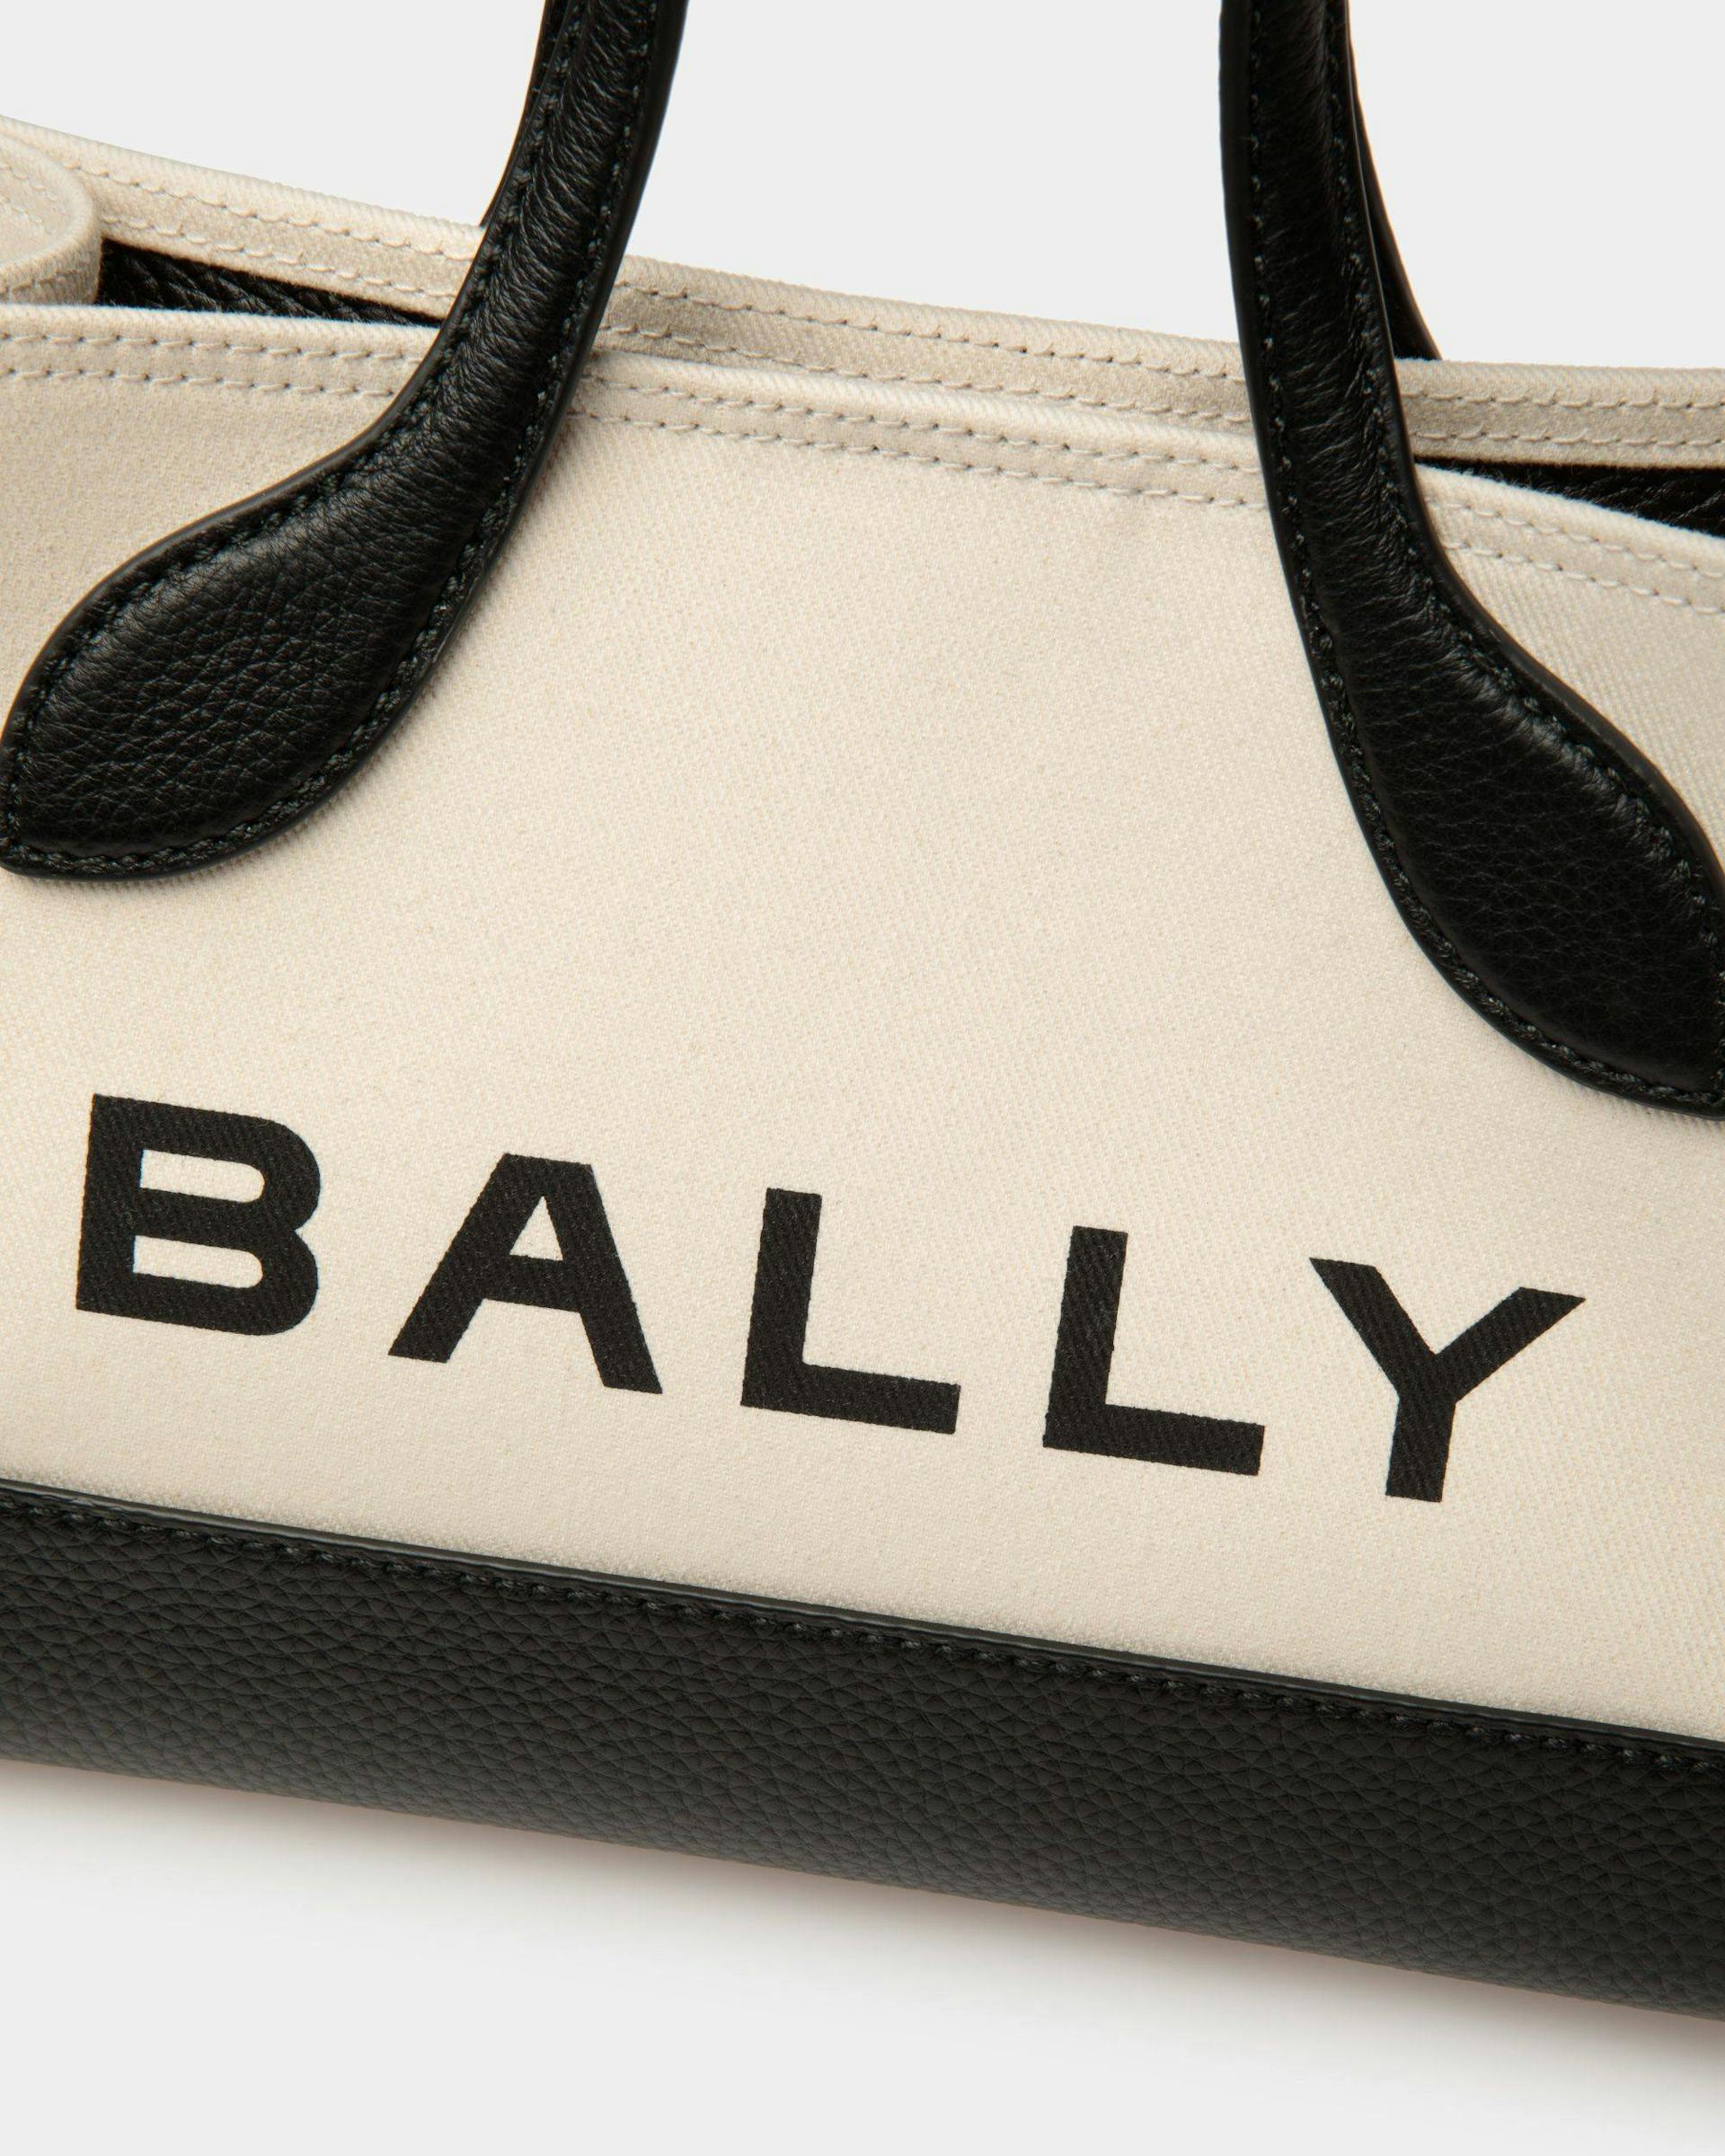 Women's Bar Minibag In Natural And Black Fabric | Bally | Still Life Detail